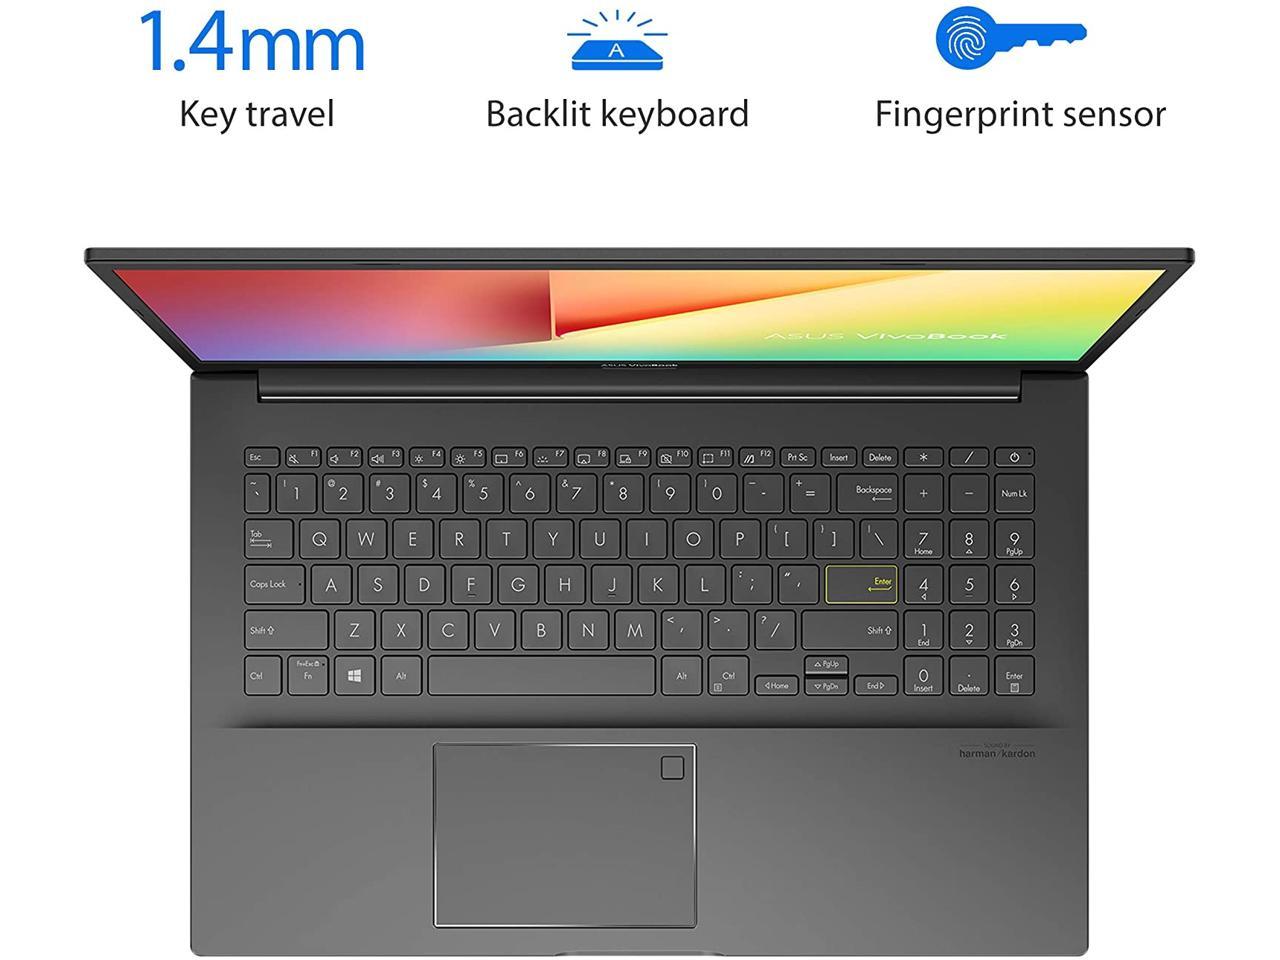 2020 Asus VivoBook 15 S513 15.6" FHD Premium Thin & Light Laptop, AMD 4th Gen Ryzen 7 4700U, 8GB RAM, 1TB PCIe SSD, Backlit Keyboard, Fingerprint Reader, WIFI 6, HDMI, USB-C, Windows 10 Home